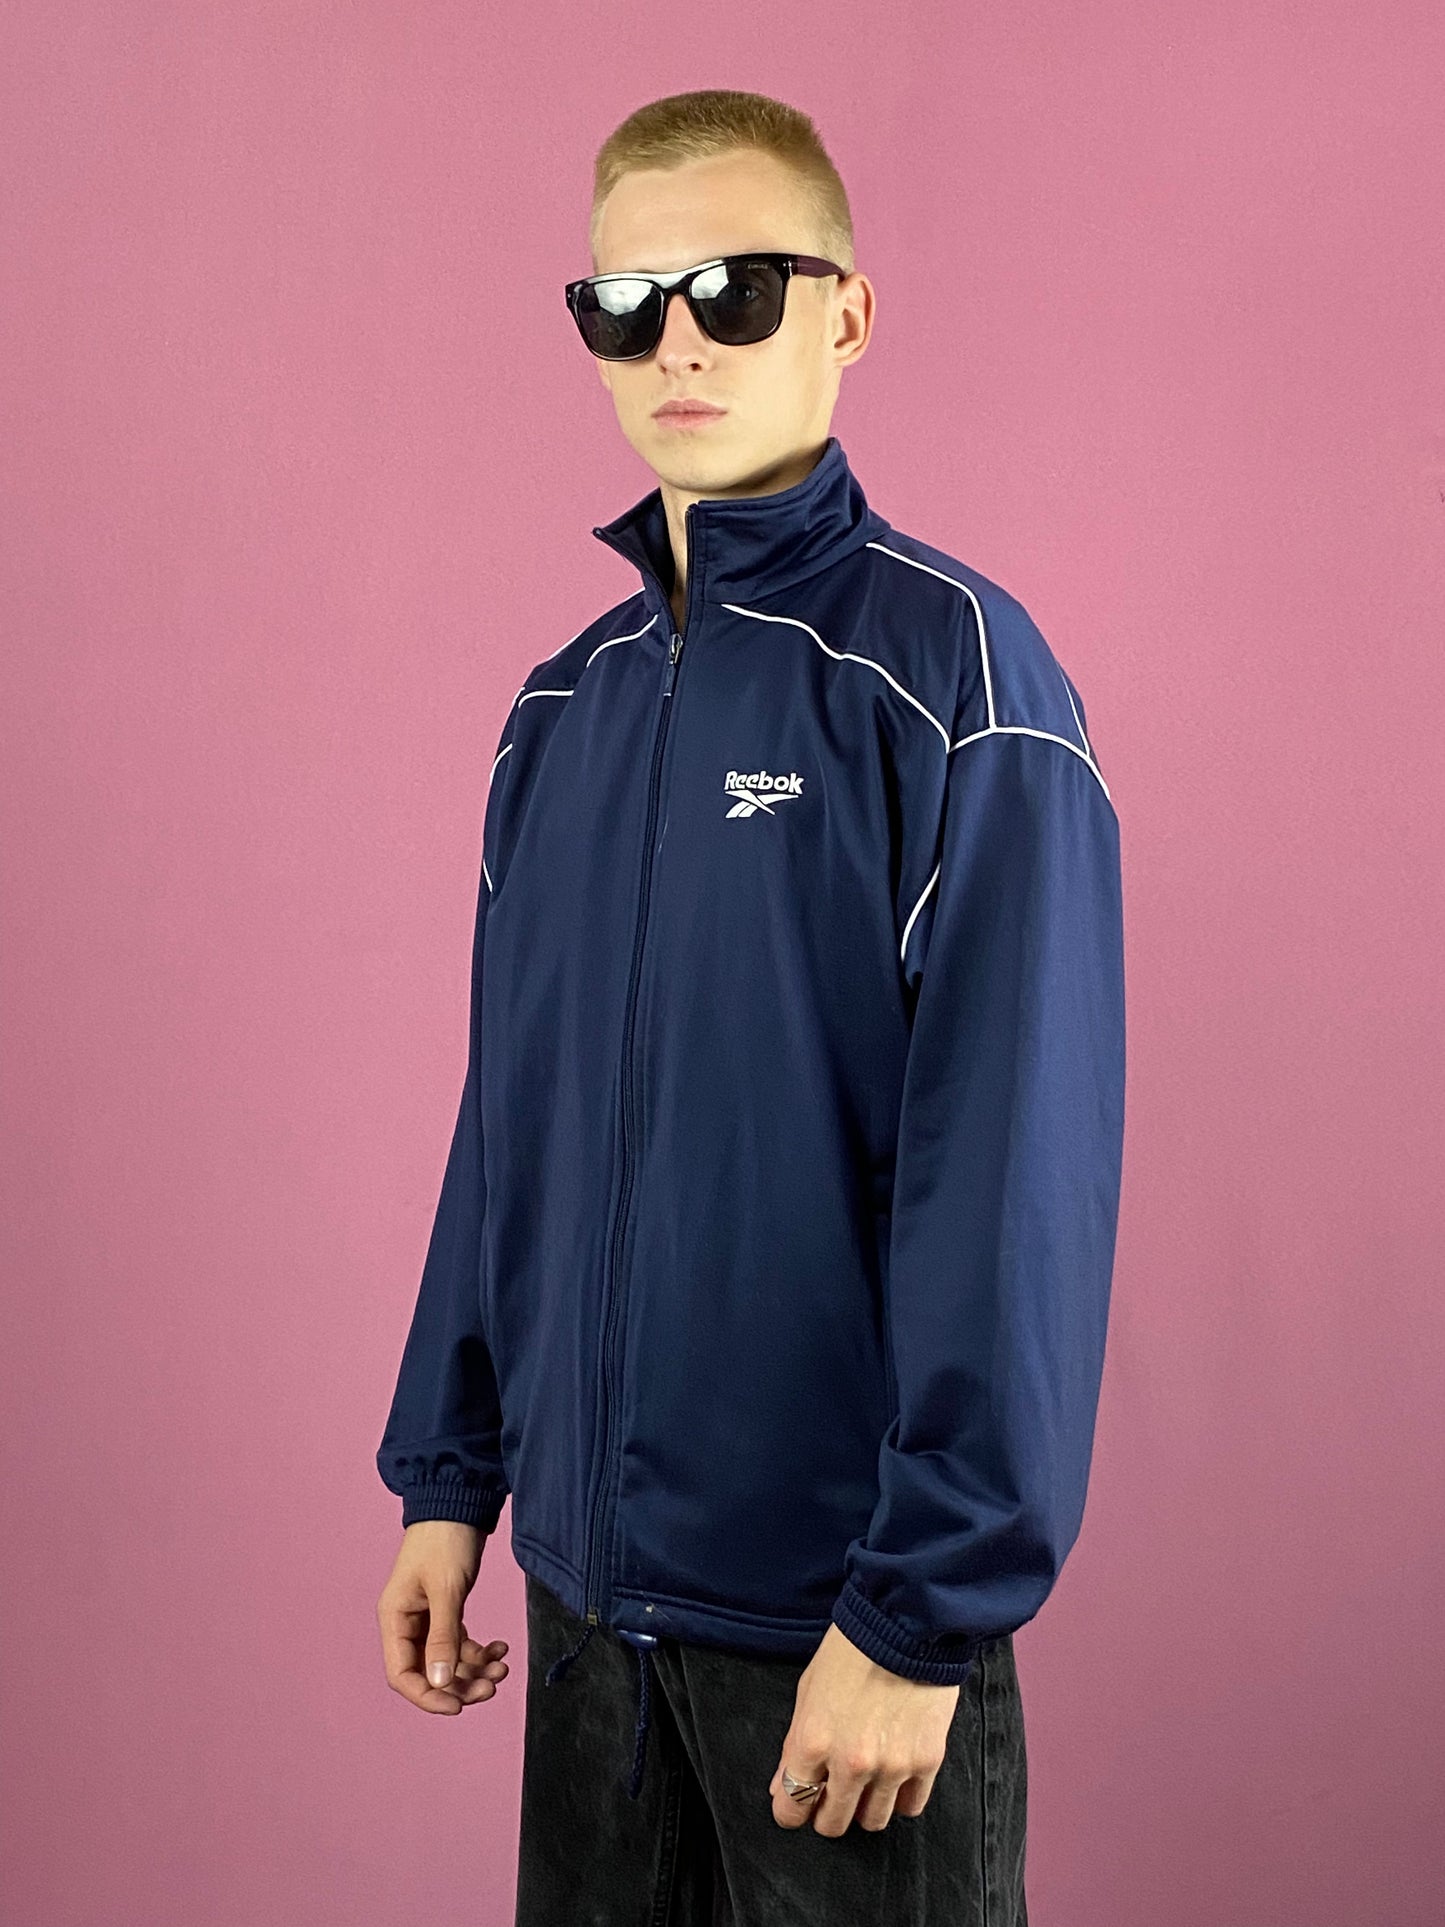 Reebok Vintage Men's Track Jacket - XS Navy Blue Polyester